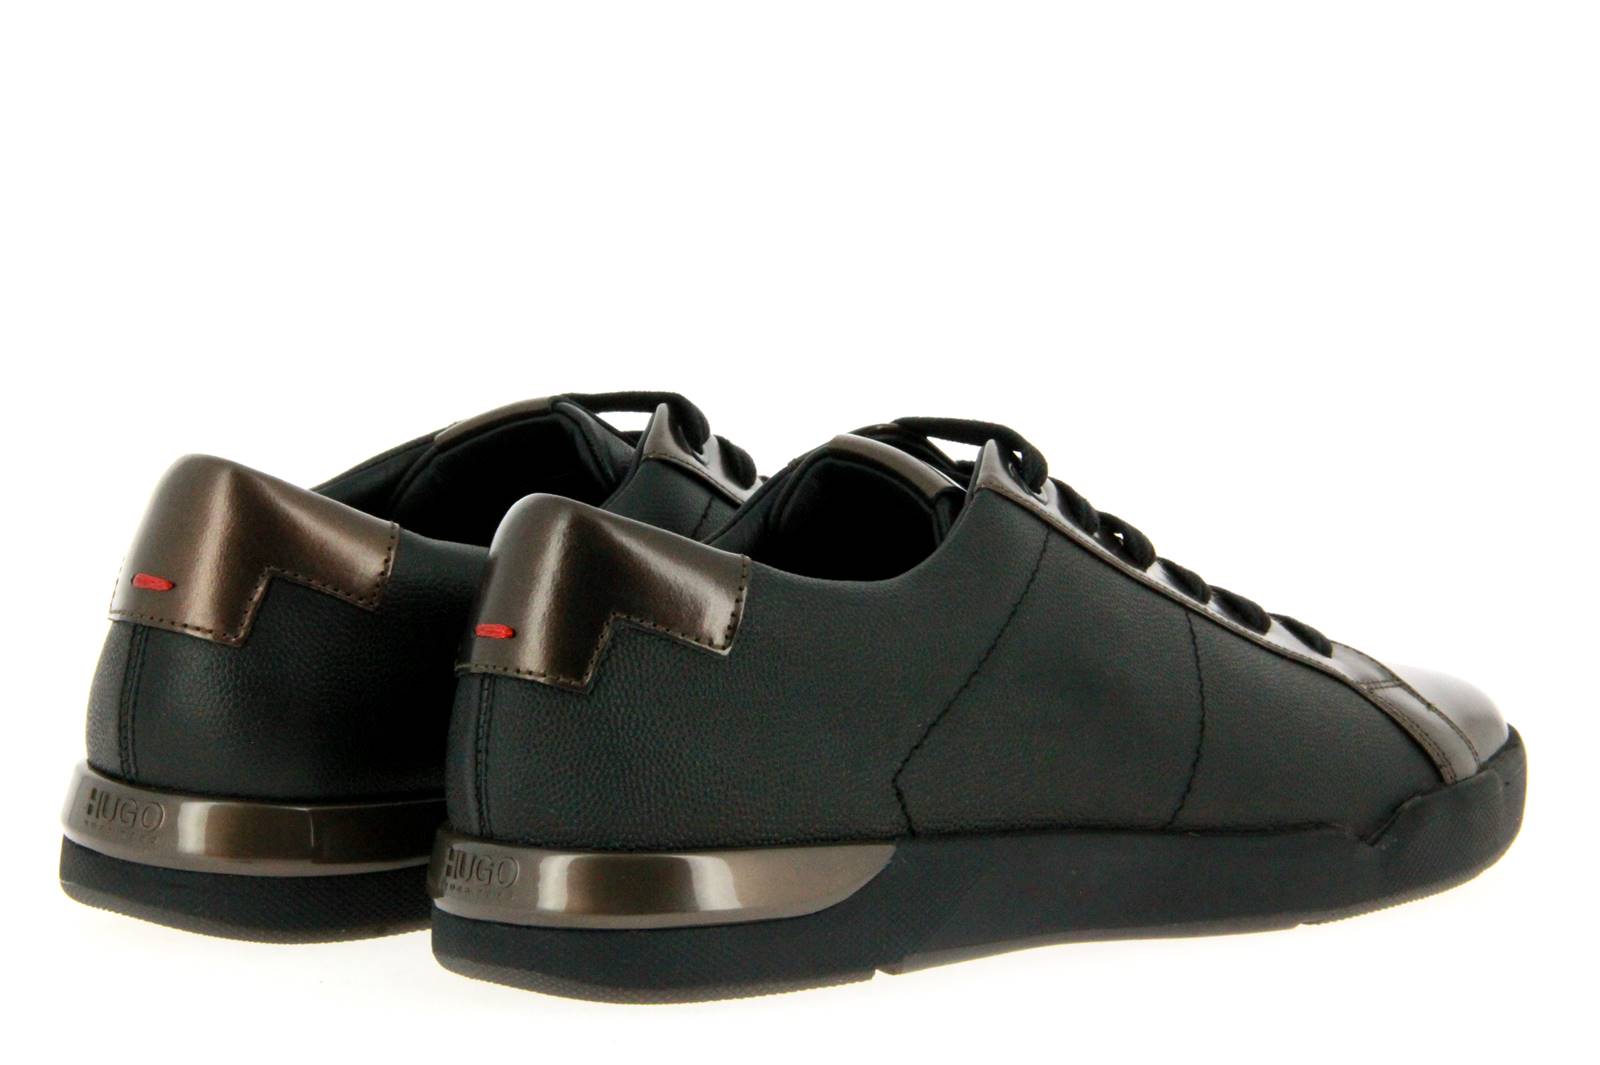 Hugo Boss Sneaker FUSION TENN MTPR BLACK (40)